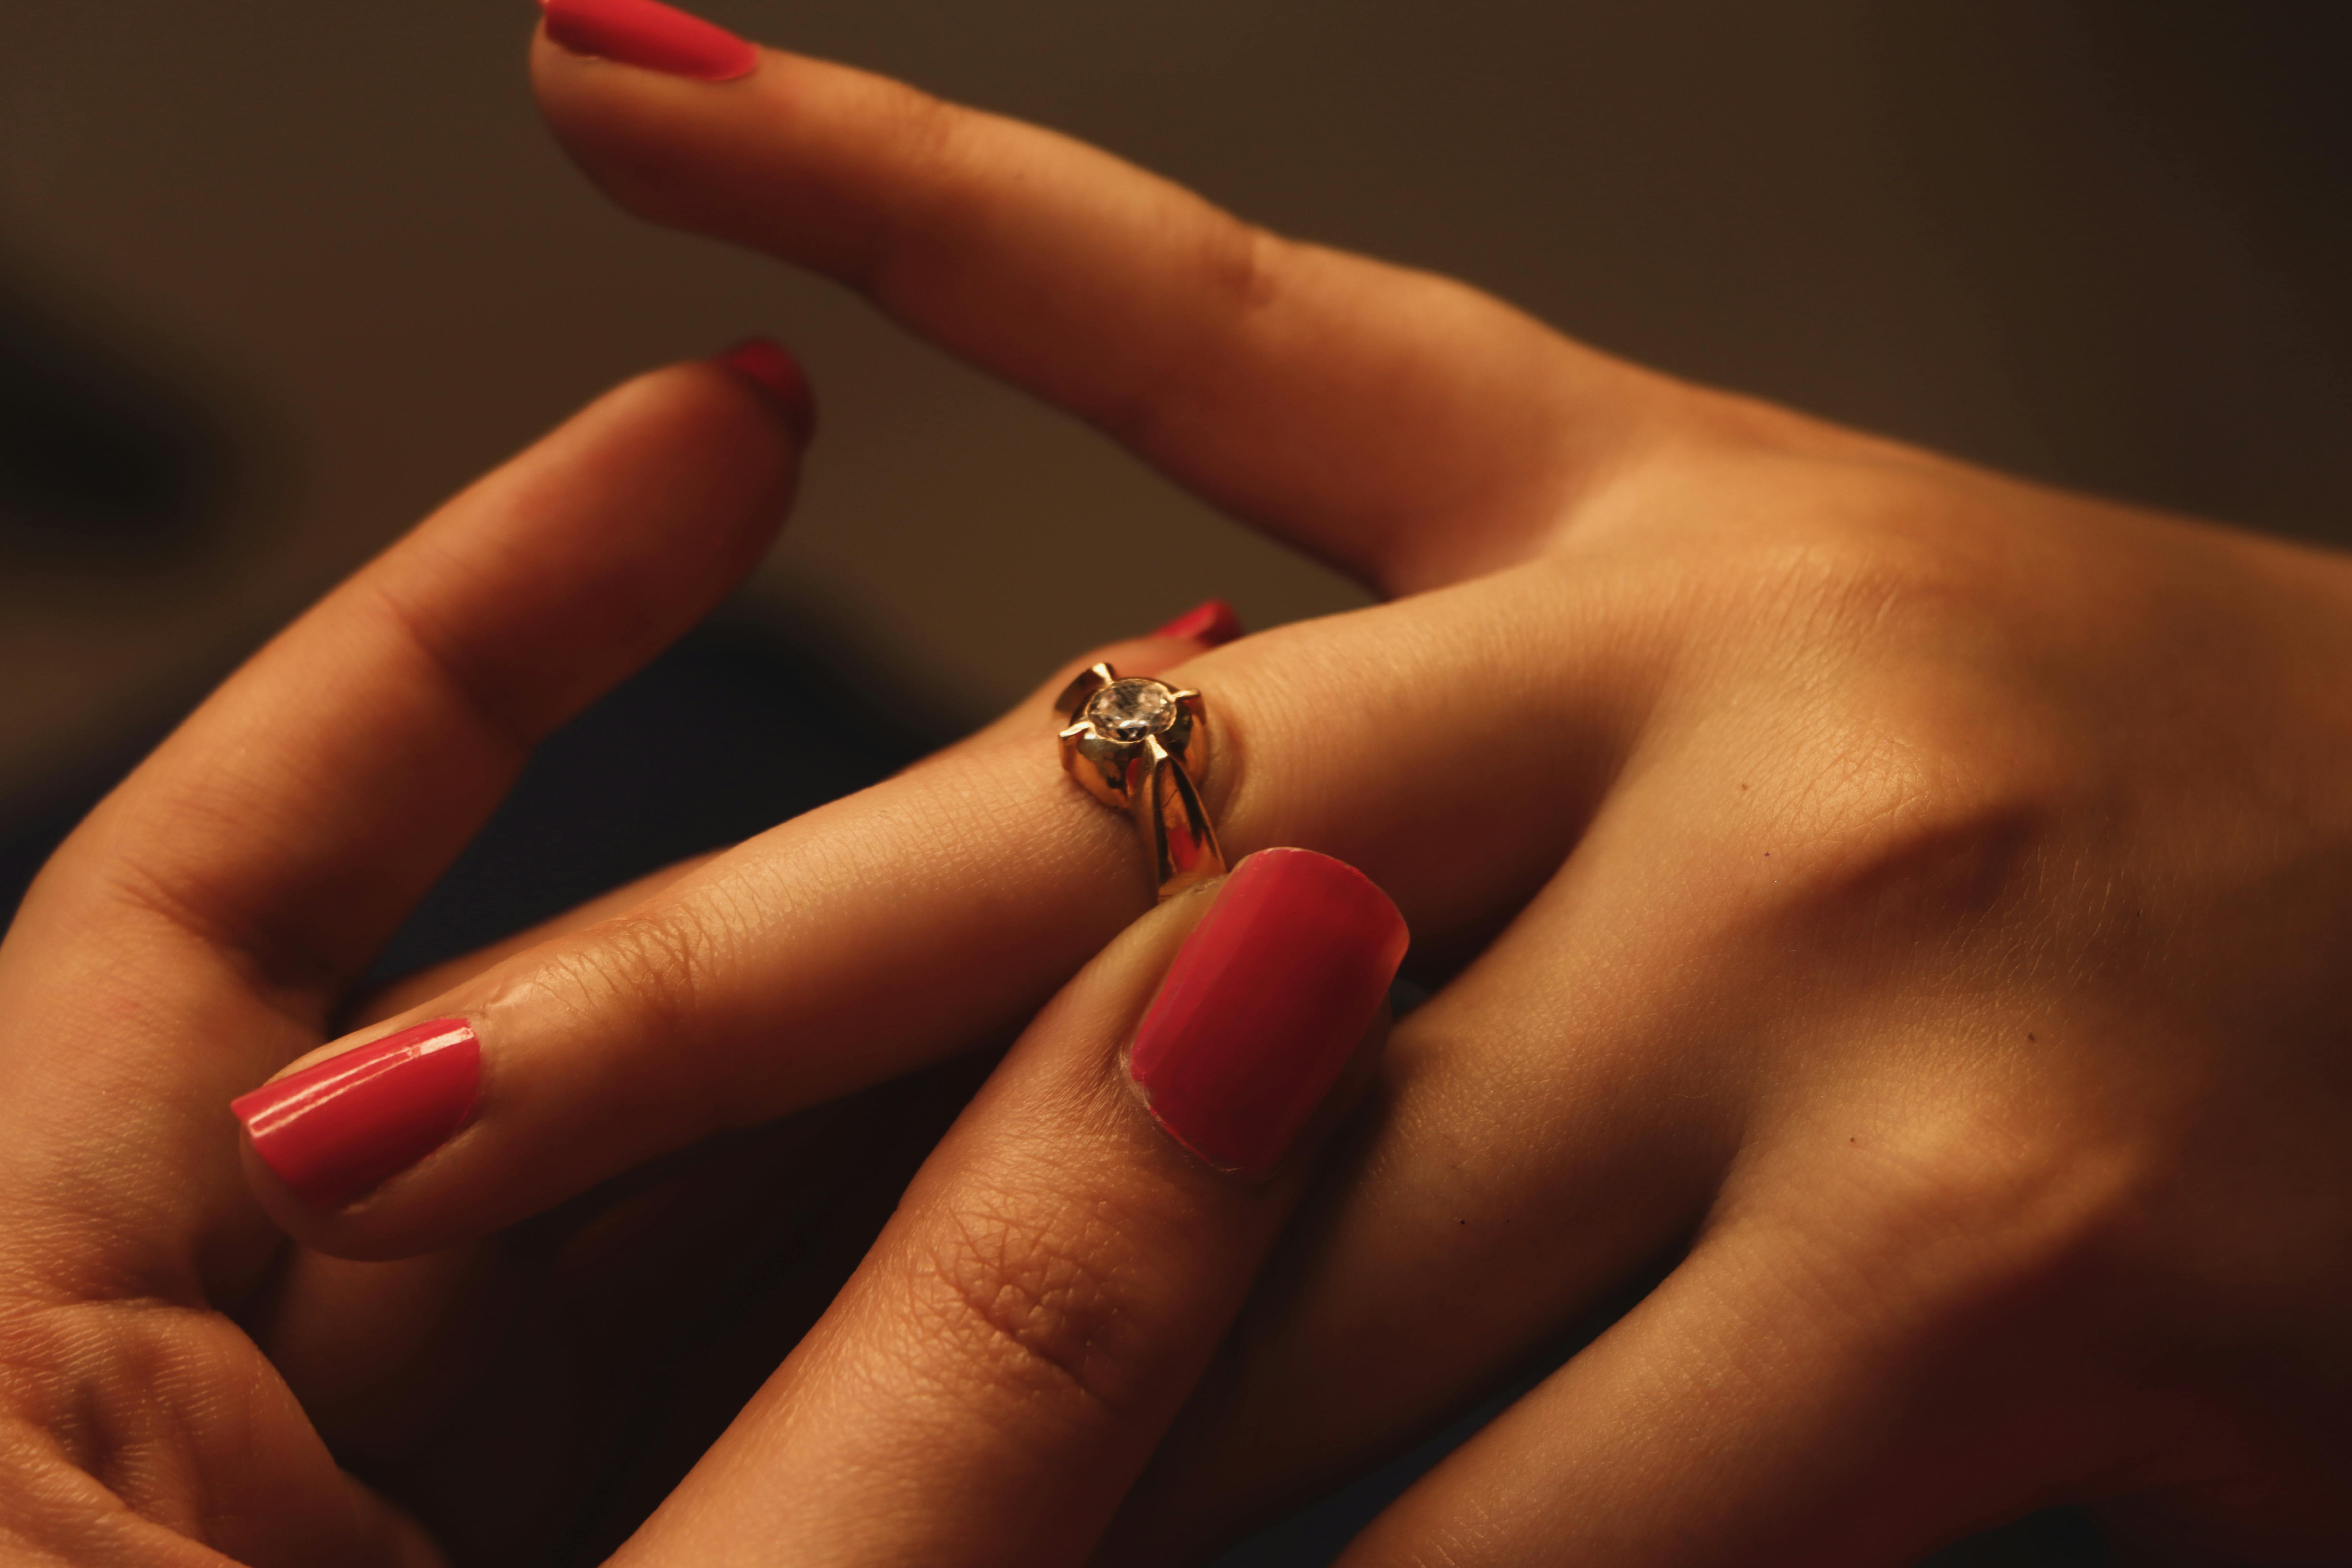 Engagement ring - Wikipedia